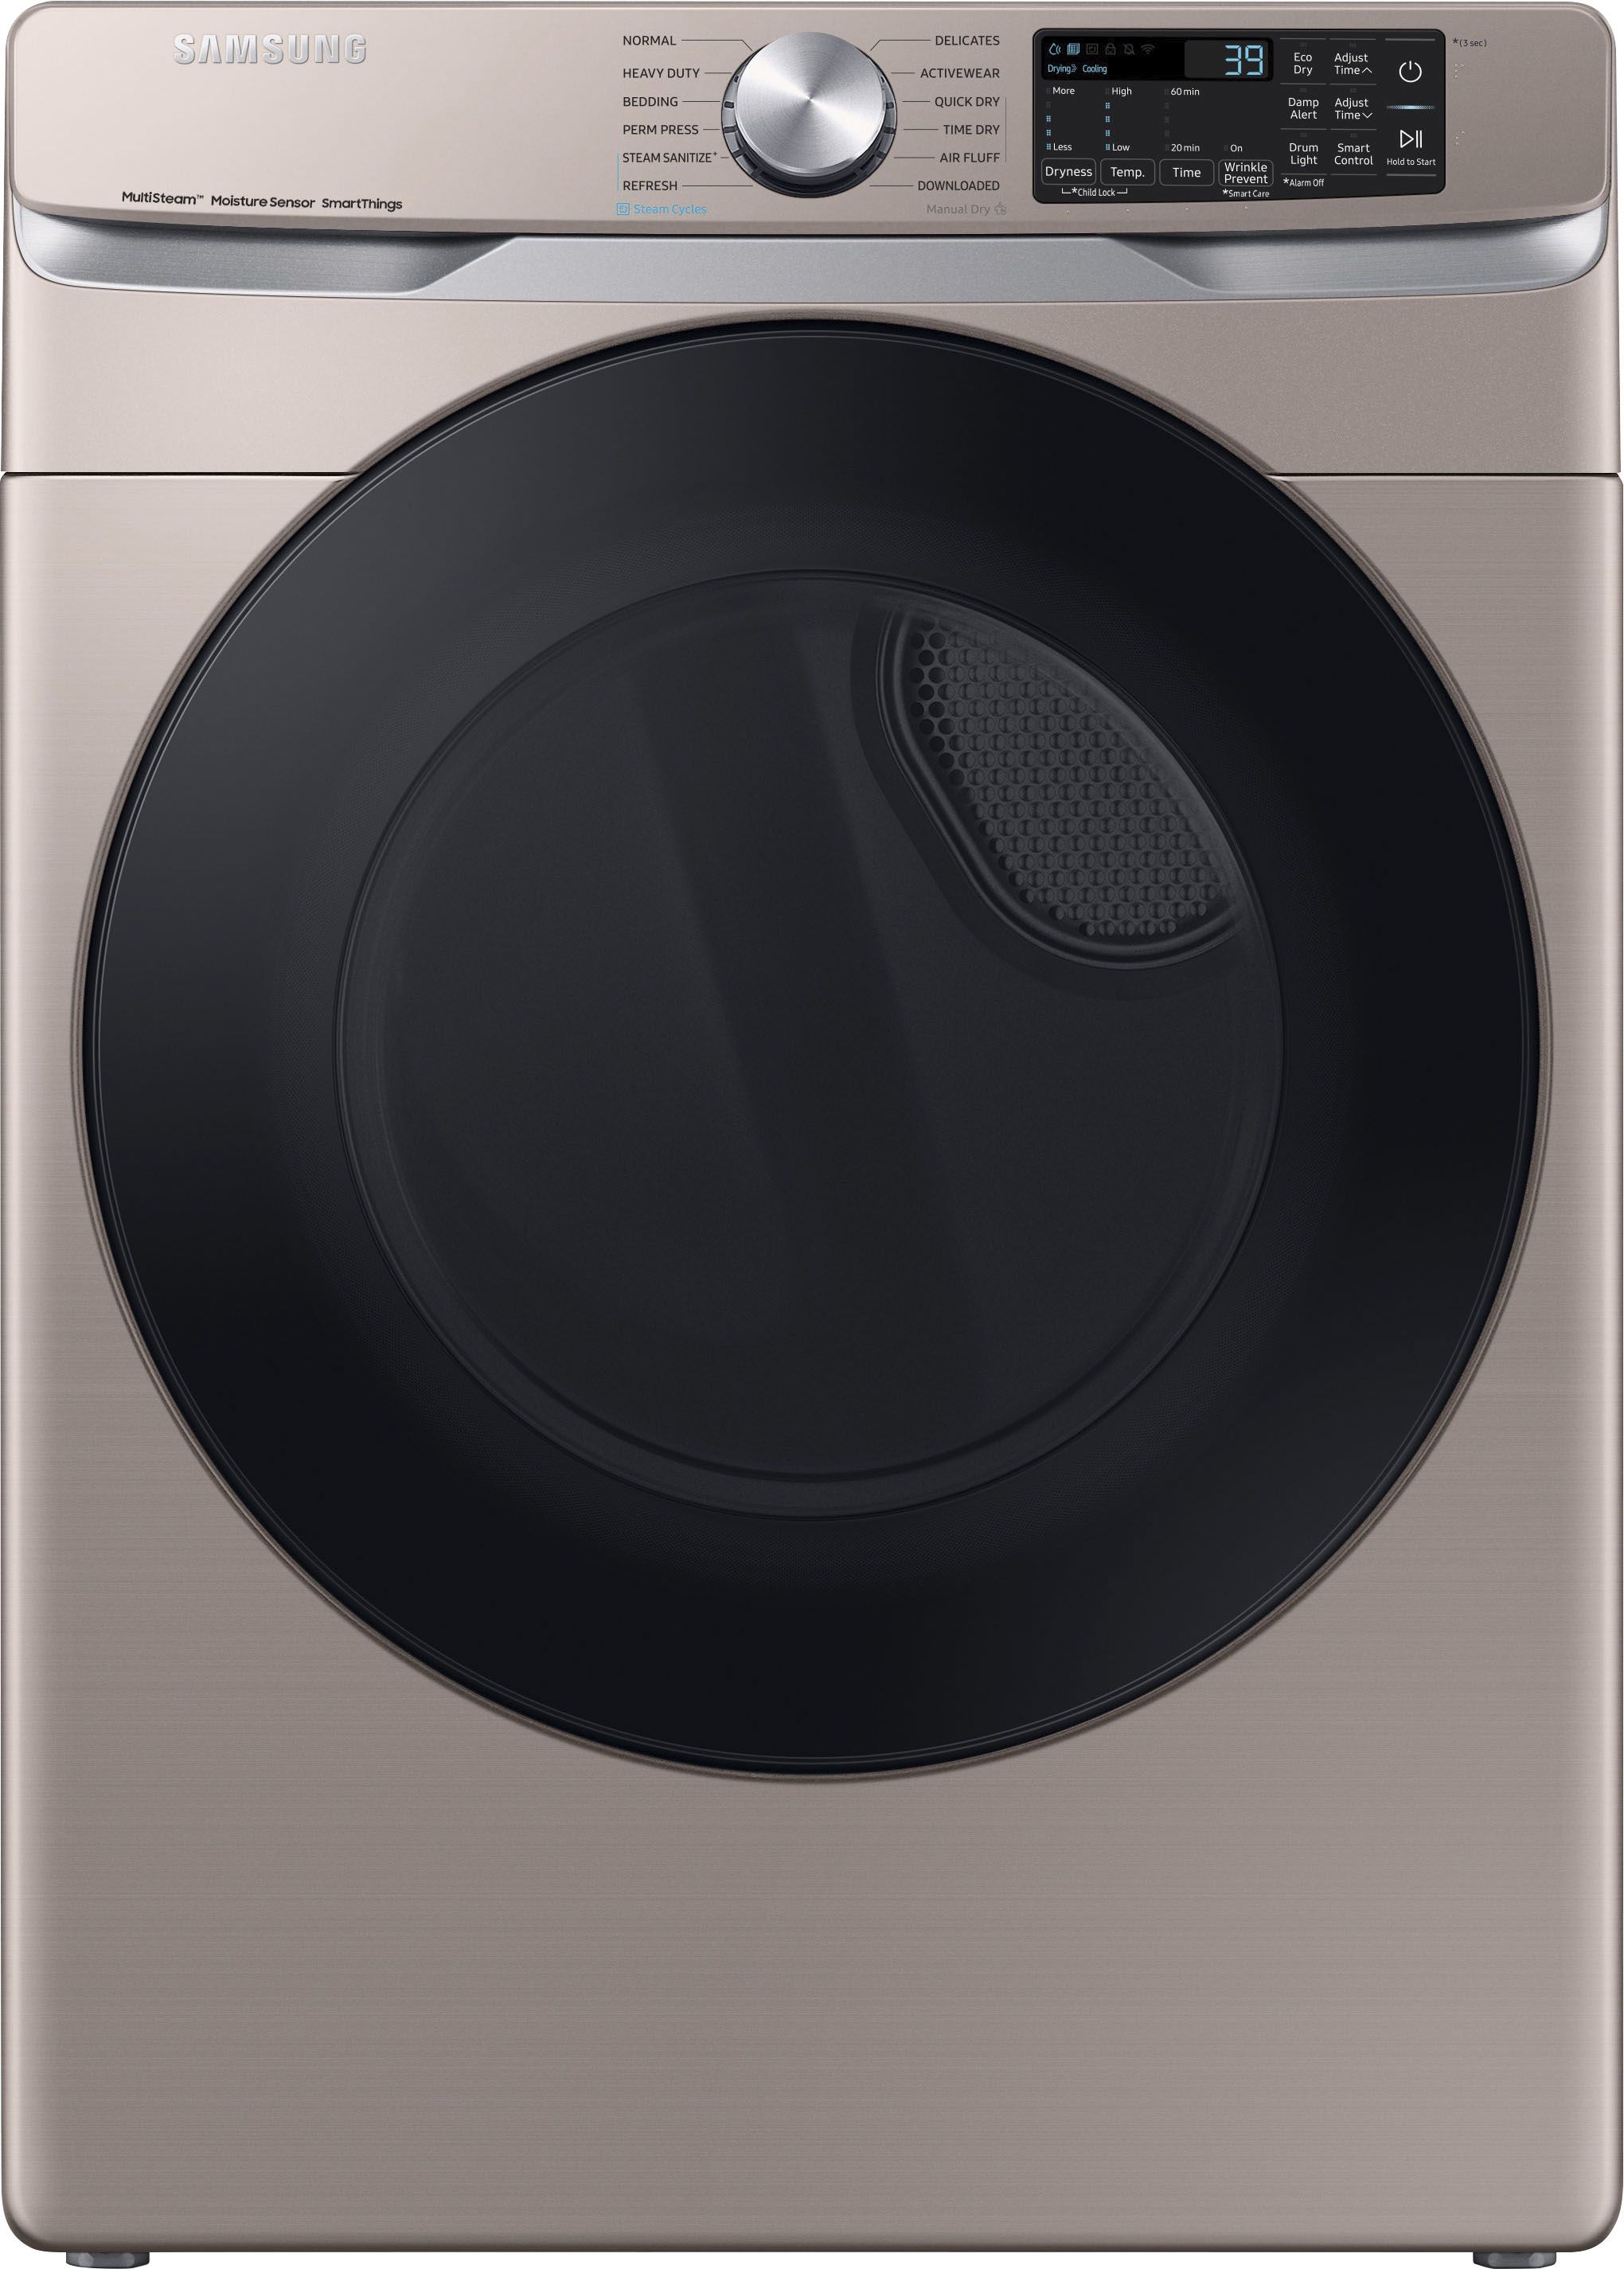 Samsung 7.5 cu. ft. Smart Electric Dryer with Steam Sanitize+ Champagne DVE45B6300C - Best Buy | Best Buy U.S.